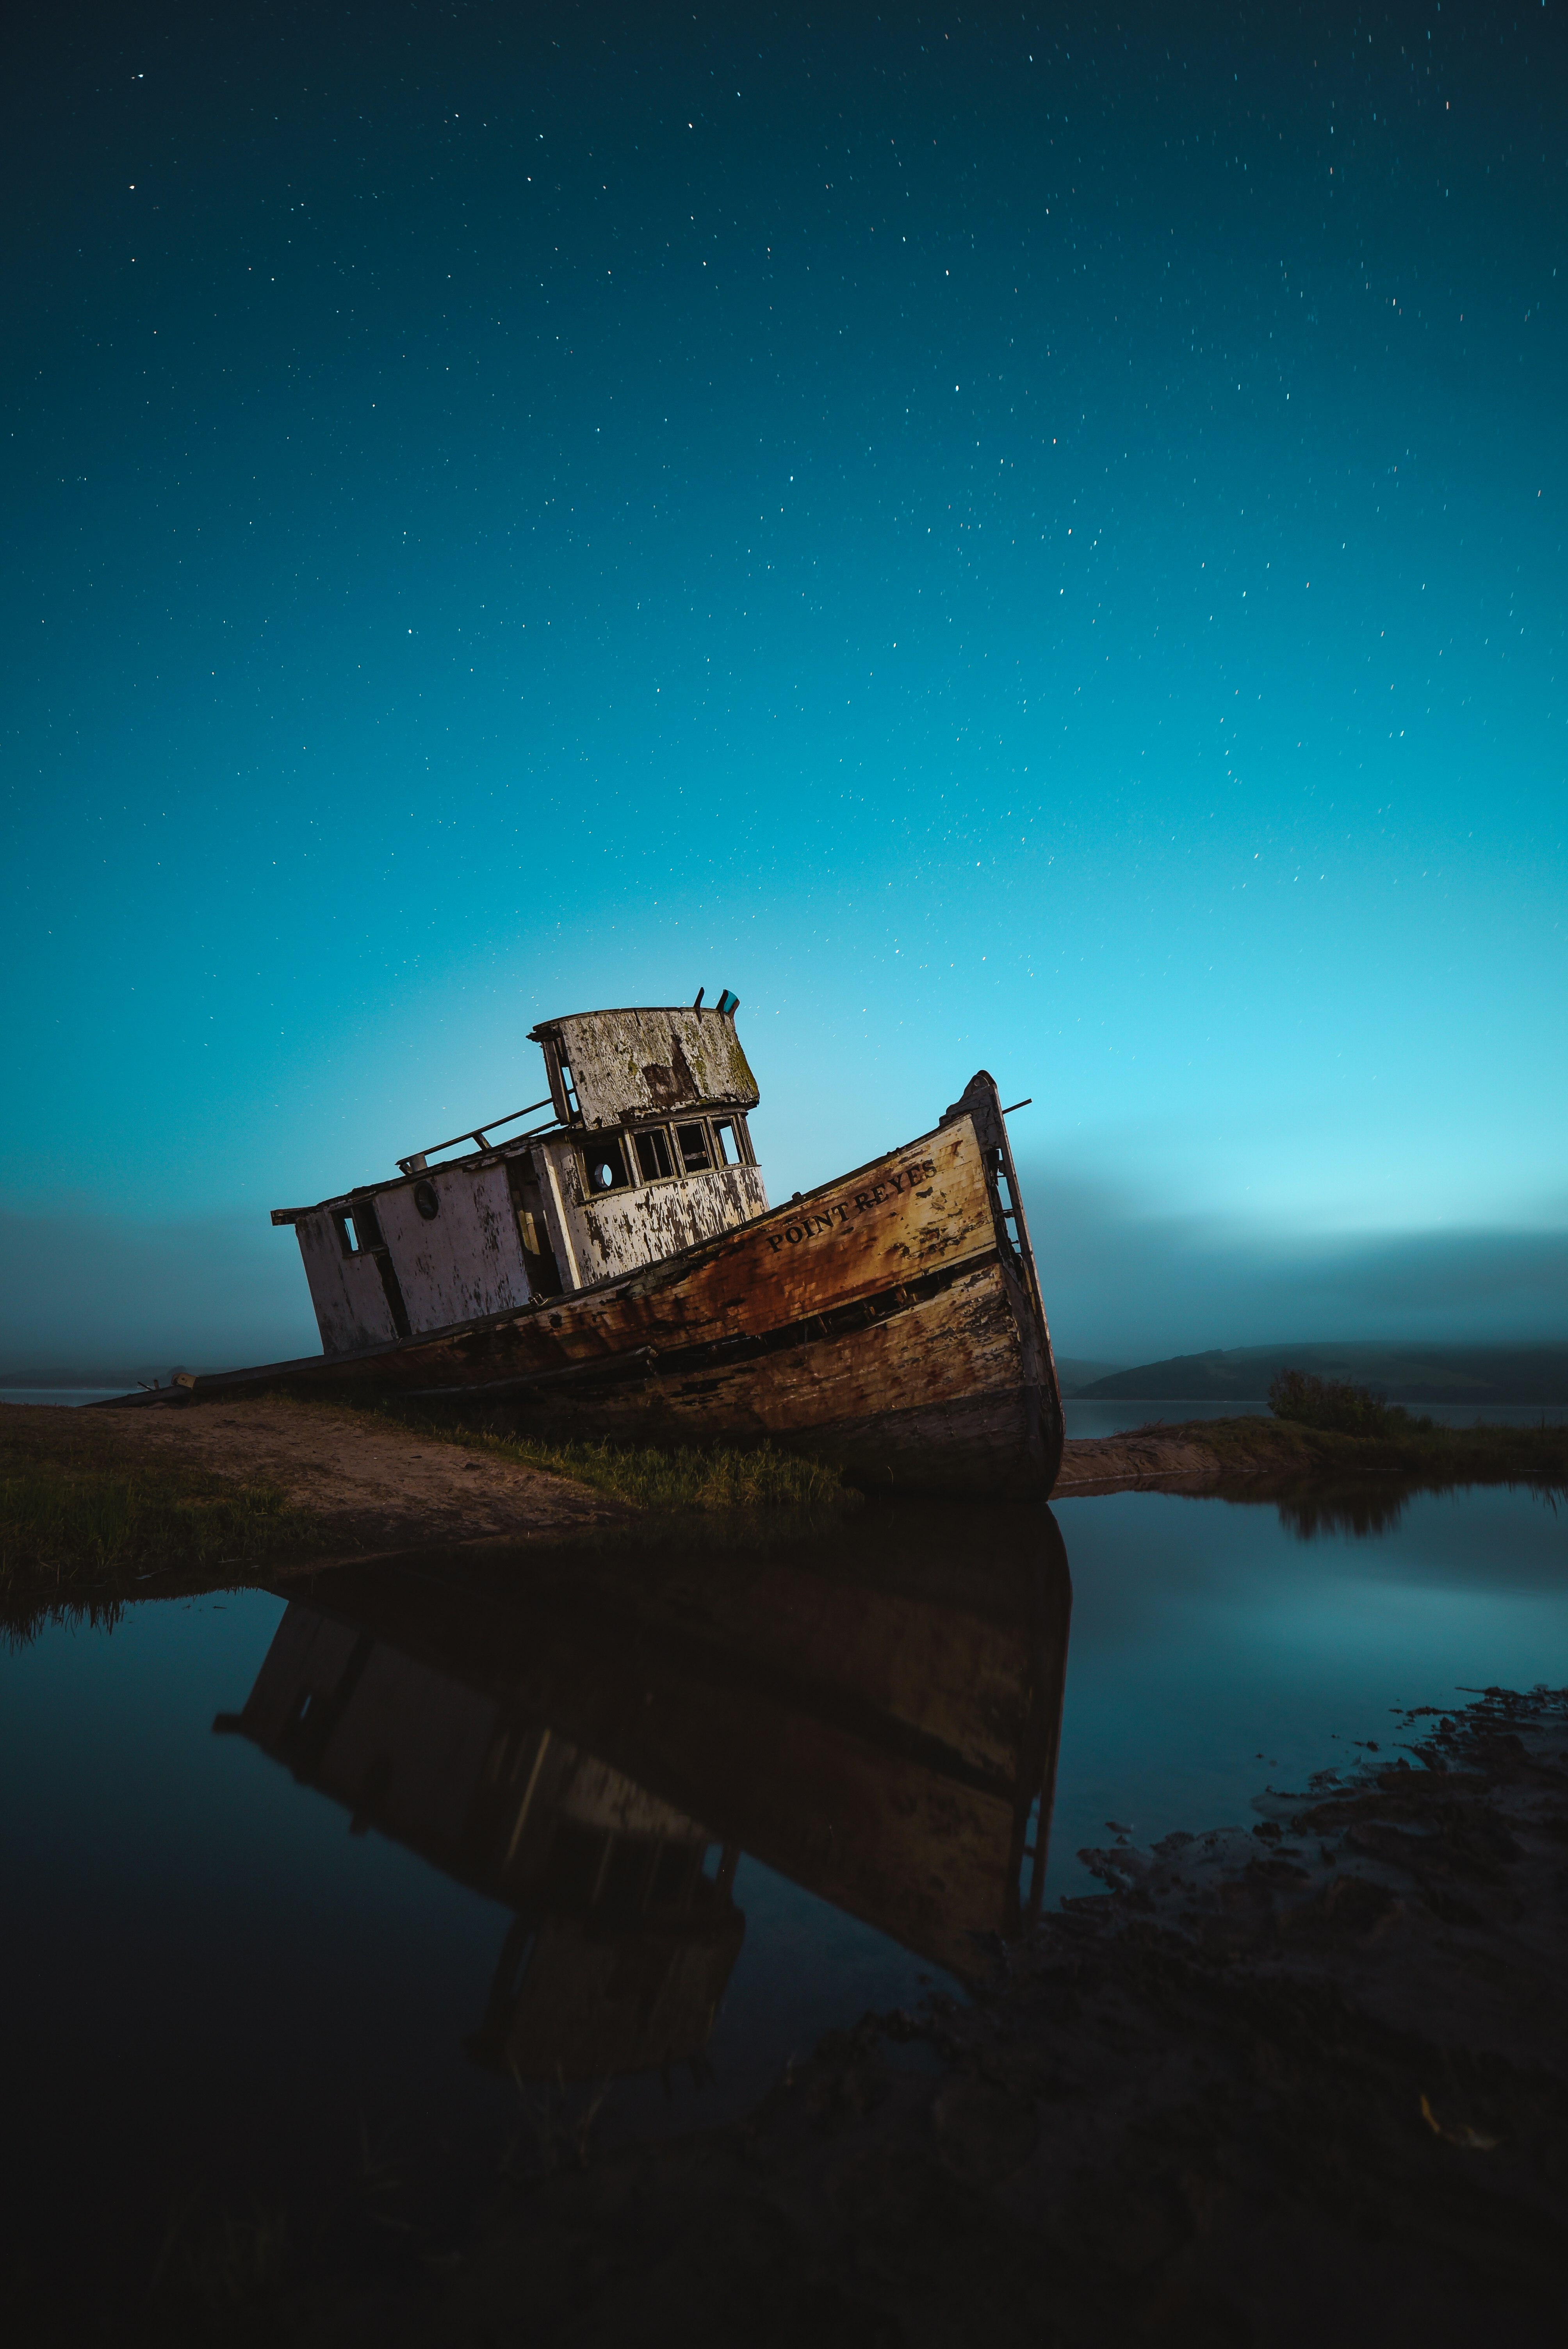 abandoned ship on seashore under sky with stars